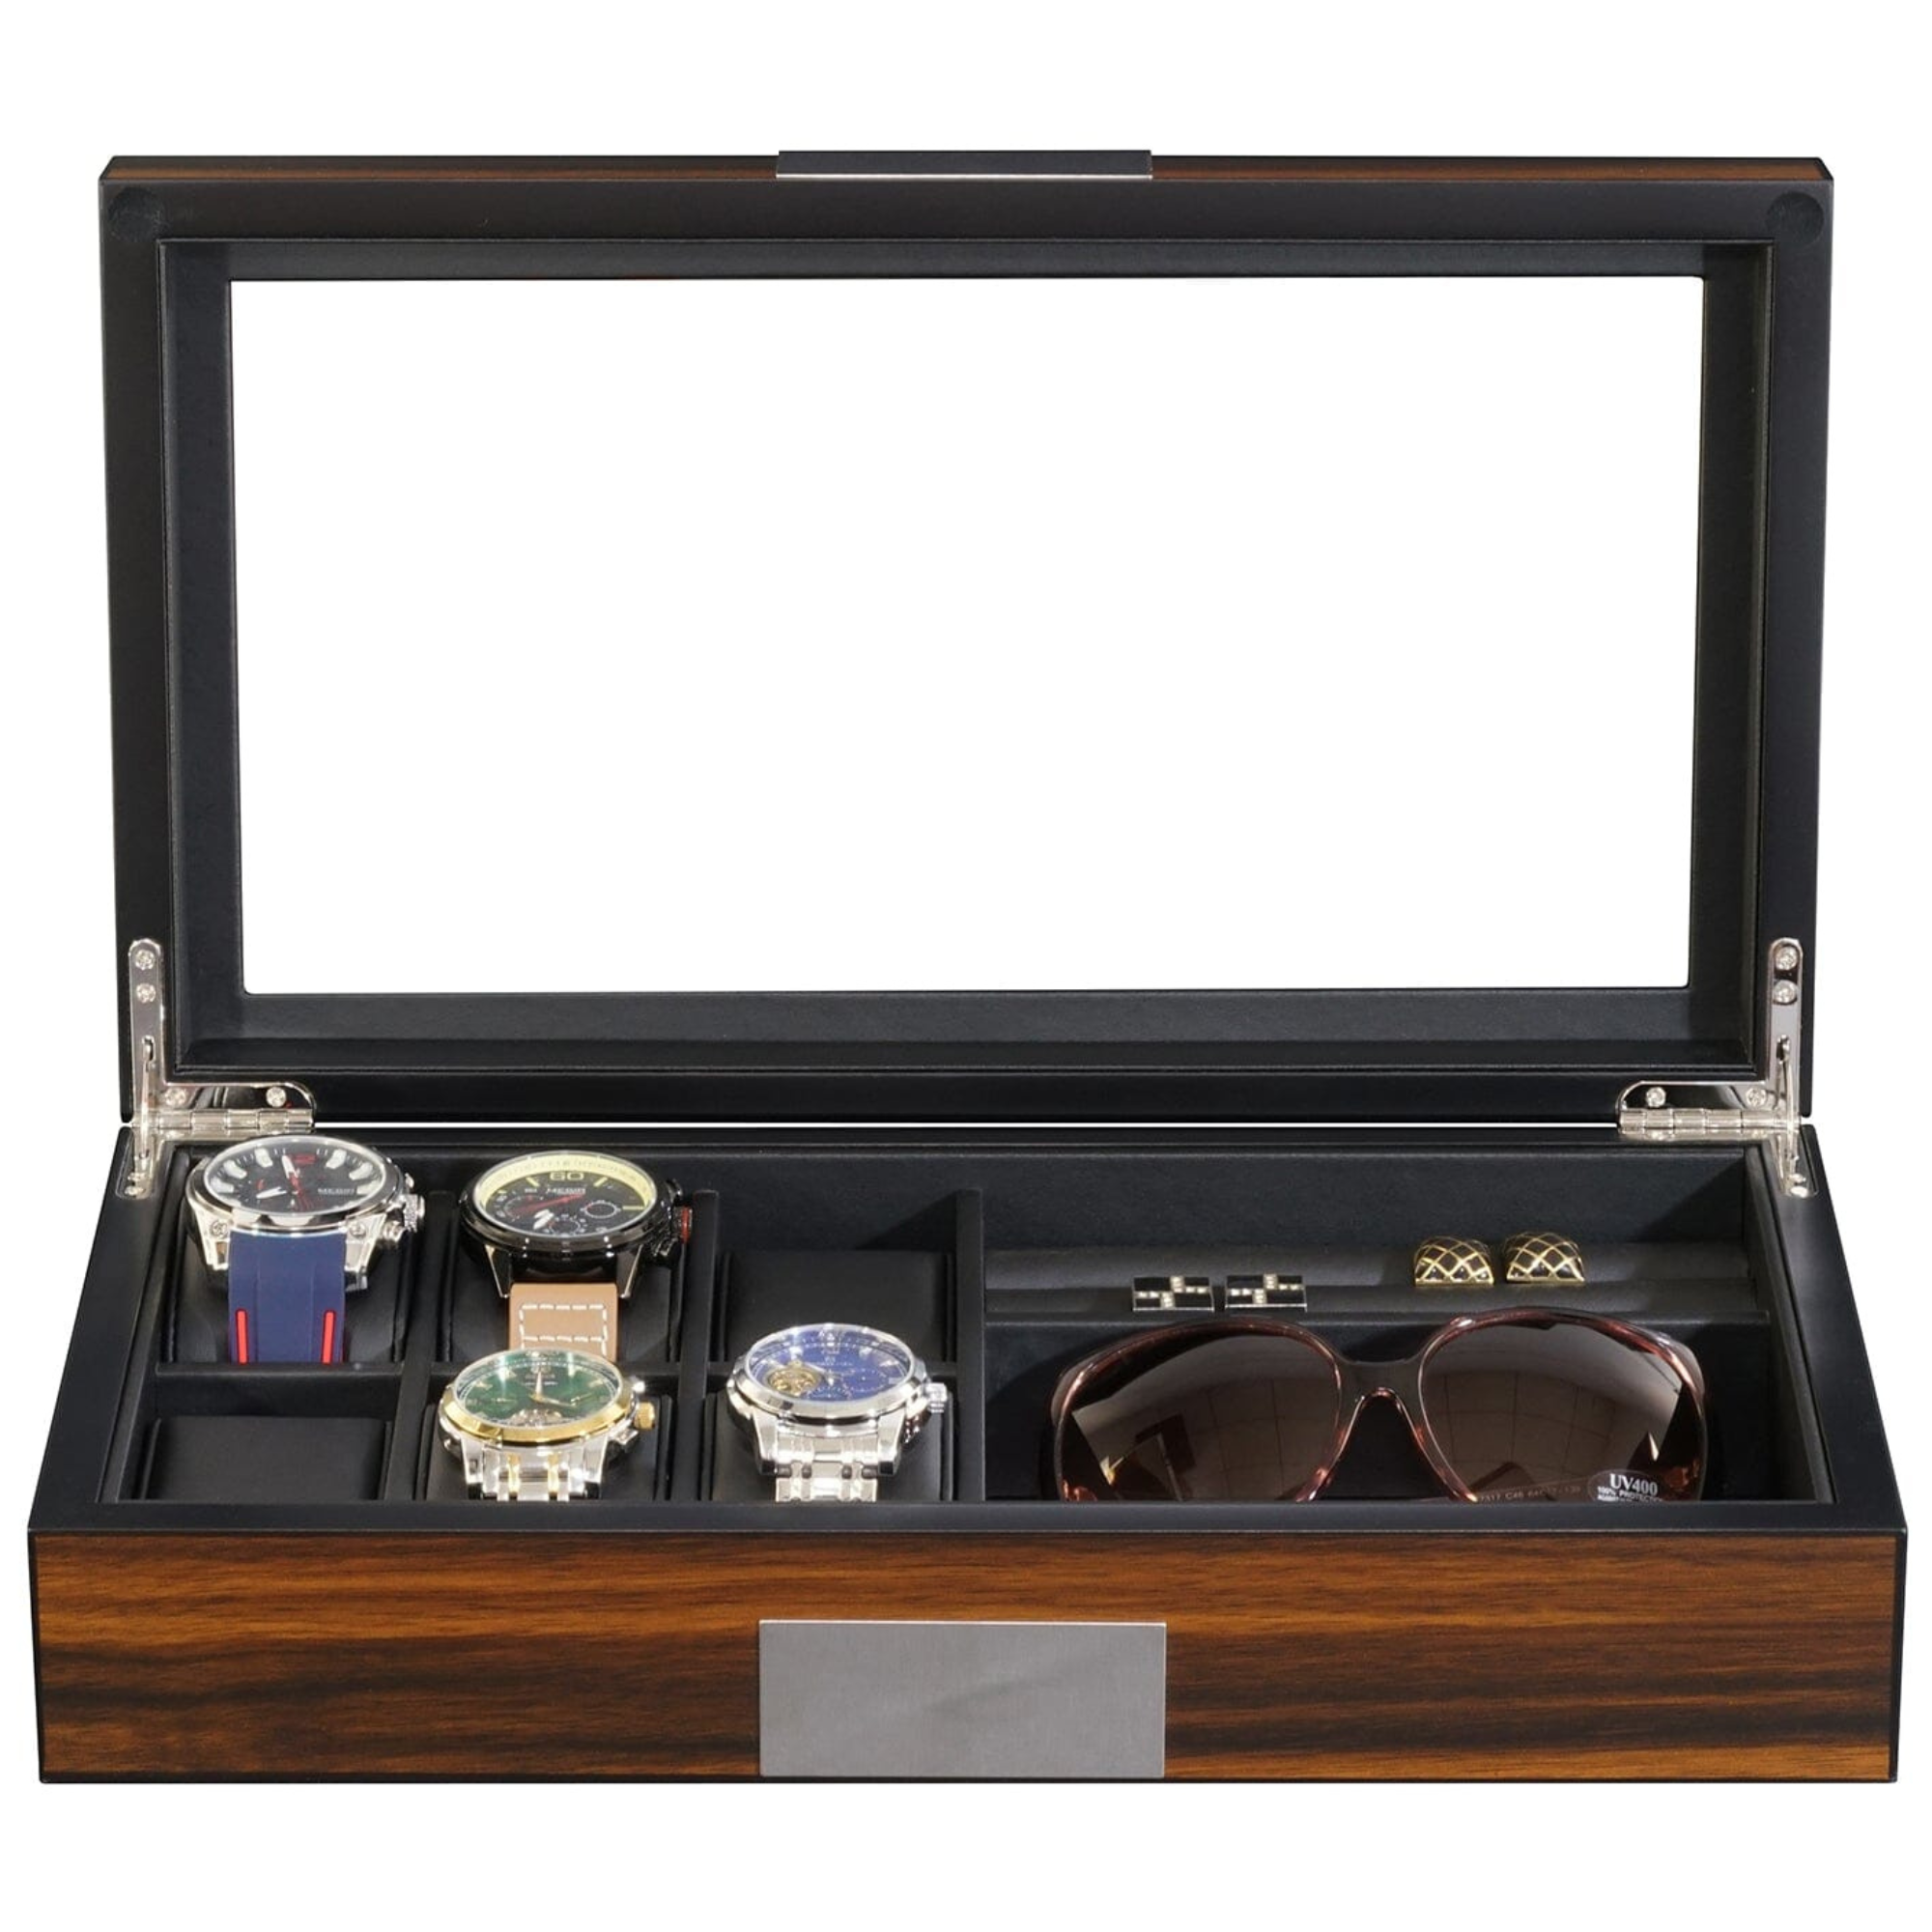 6 Slots Watch Box with Cufflinks and Sunglasses Storage in Ebony Wood